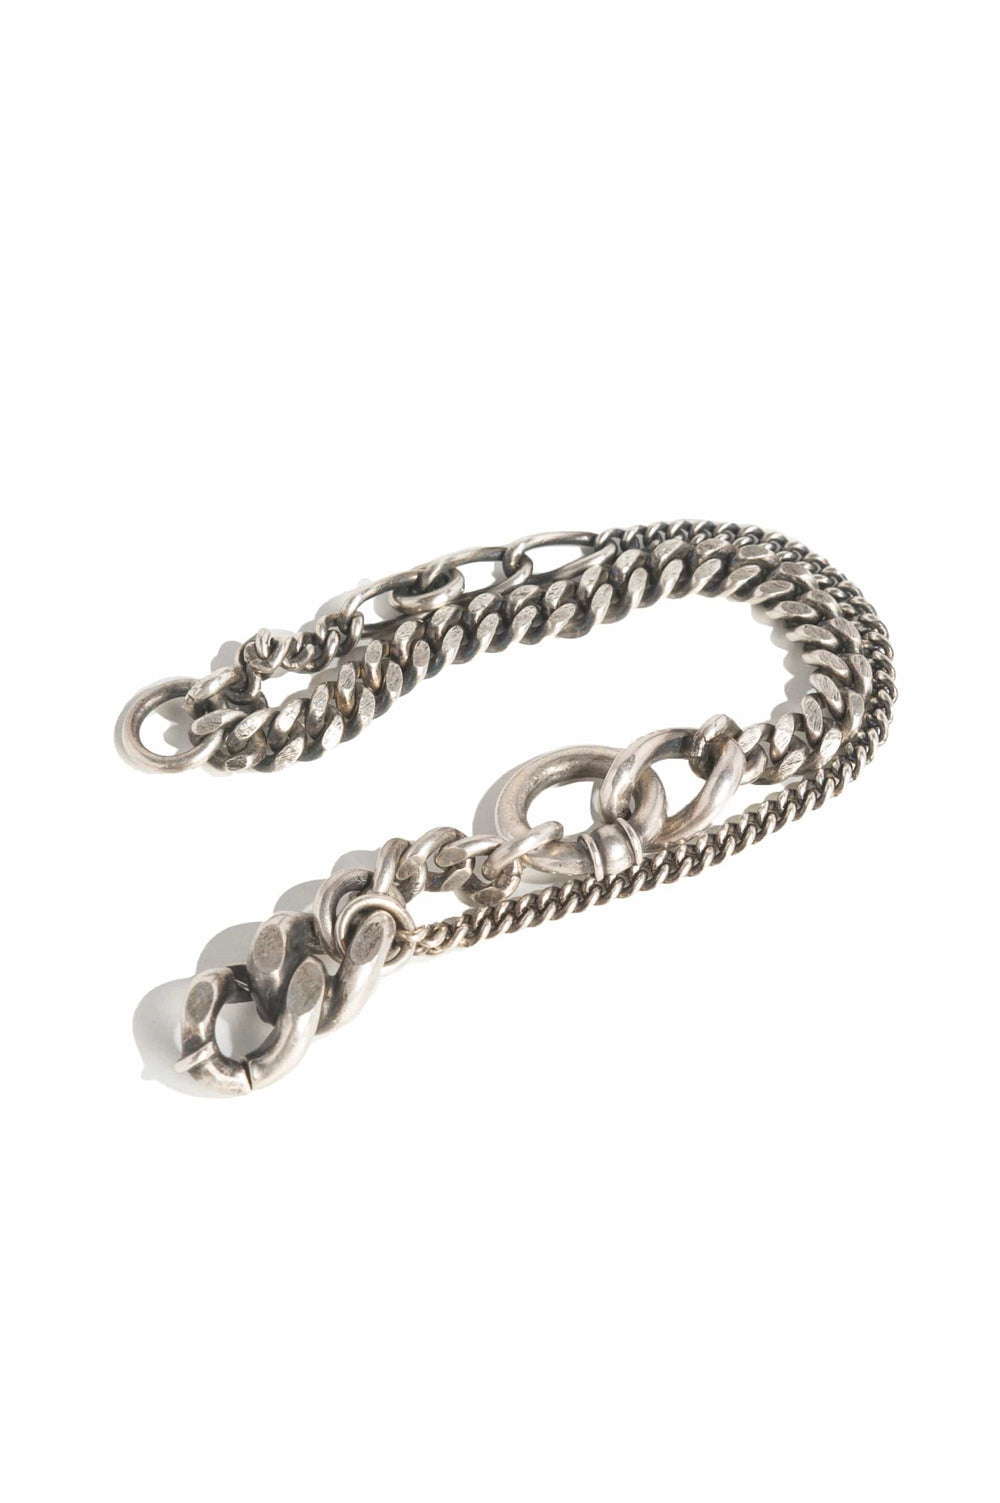 Two Chains and Fashion – Bracelet Lifestyle Silver München Antidote Ring Werkstatt